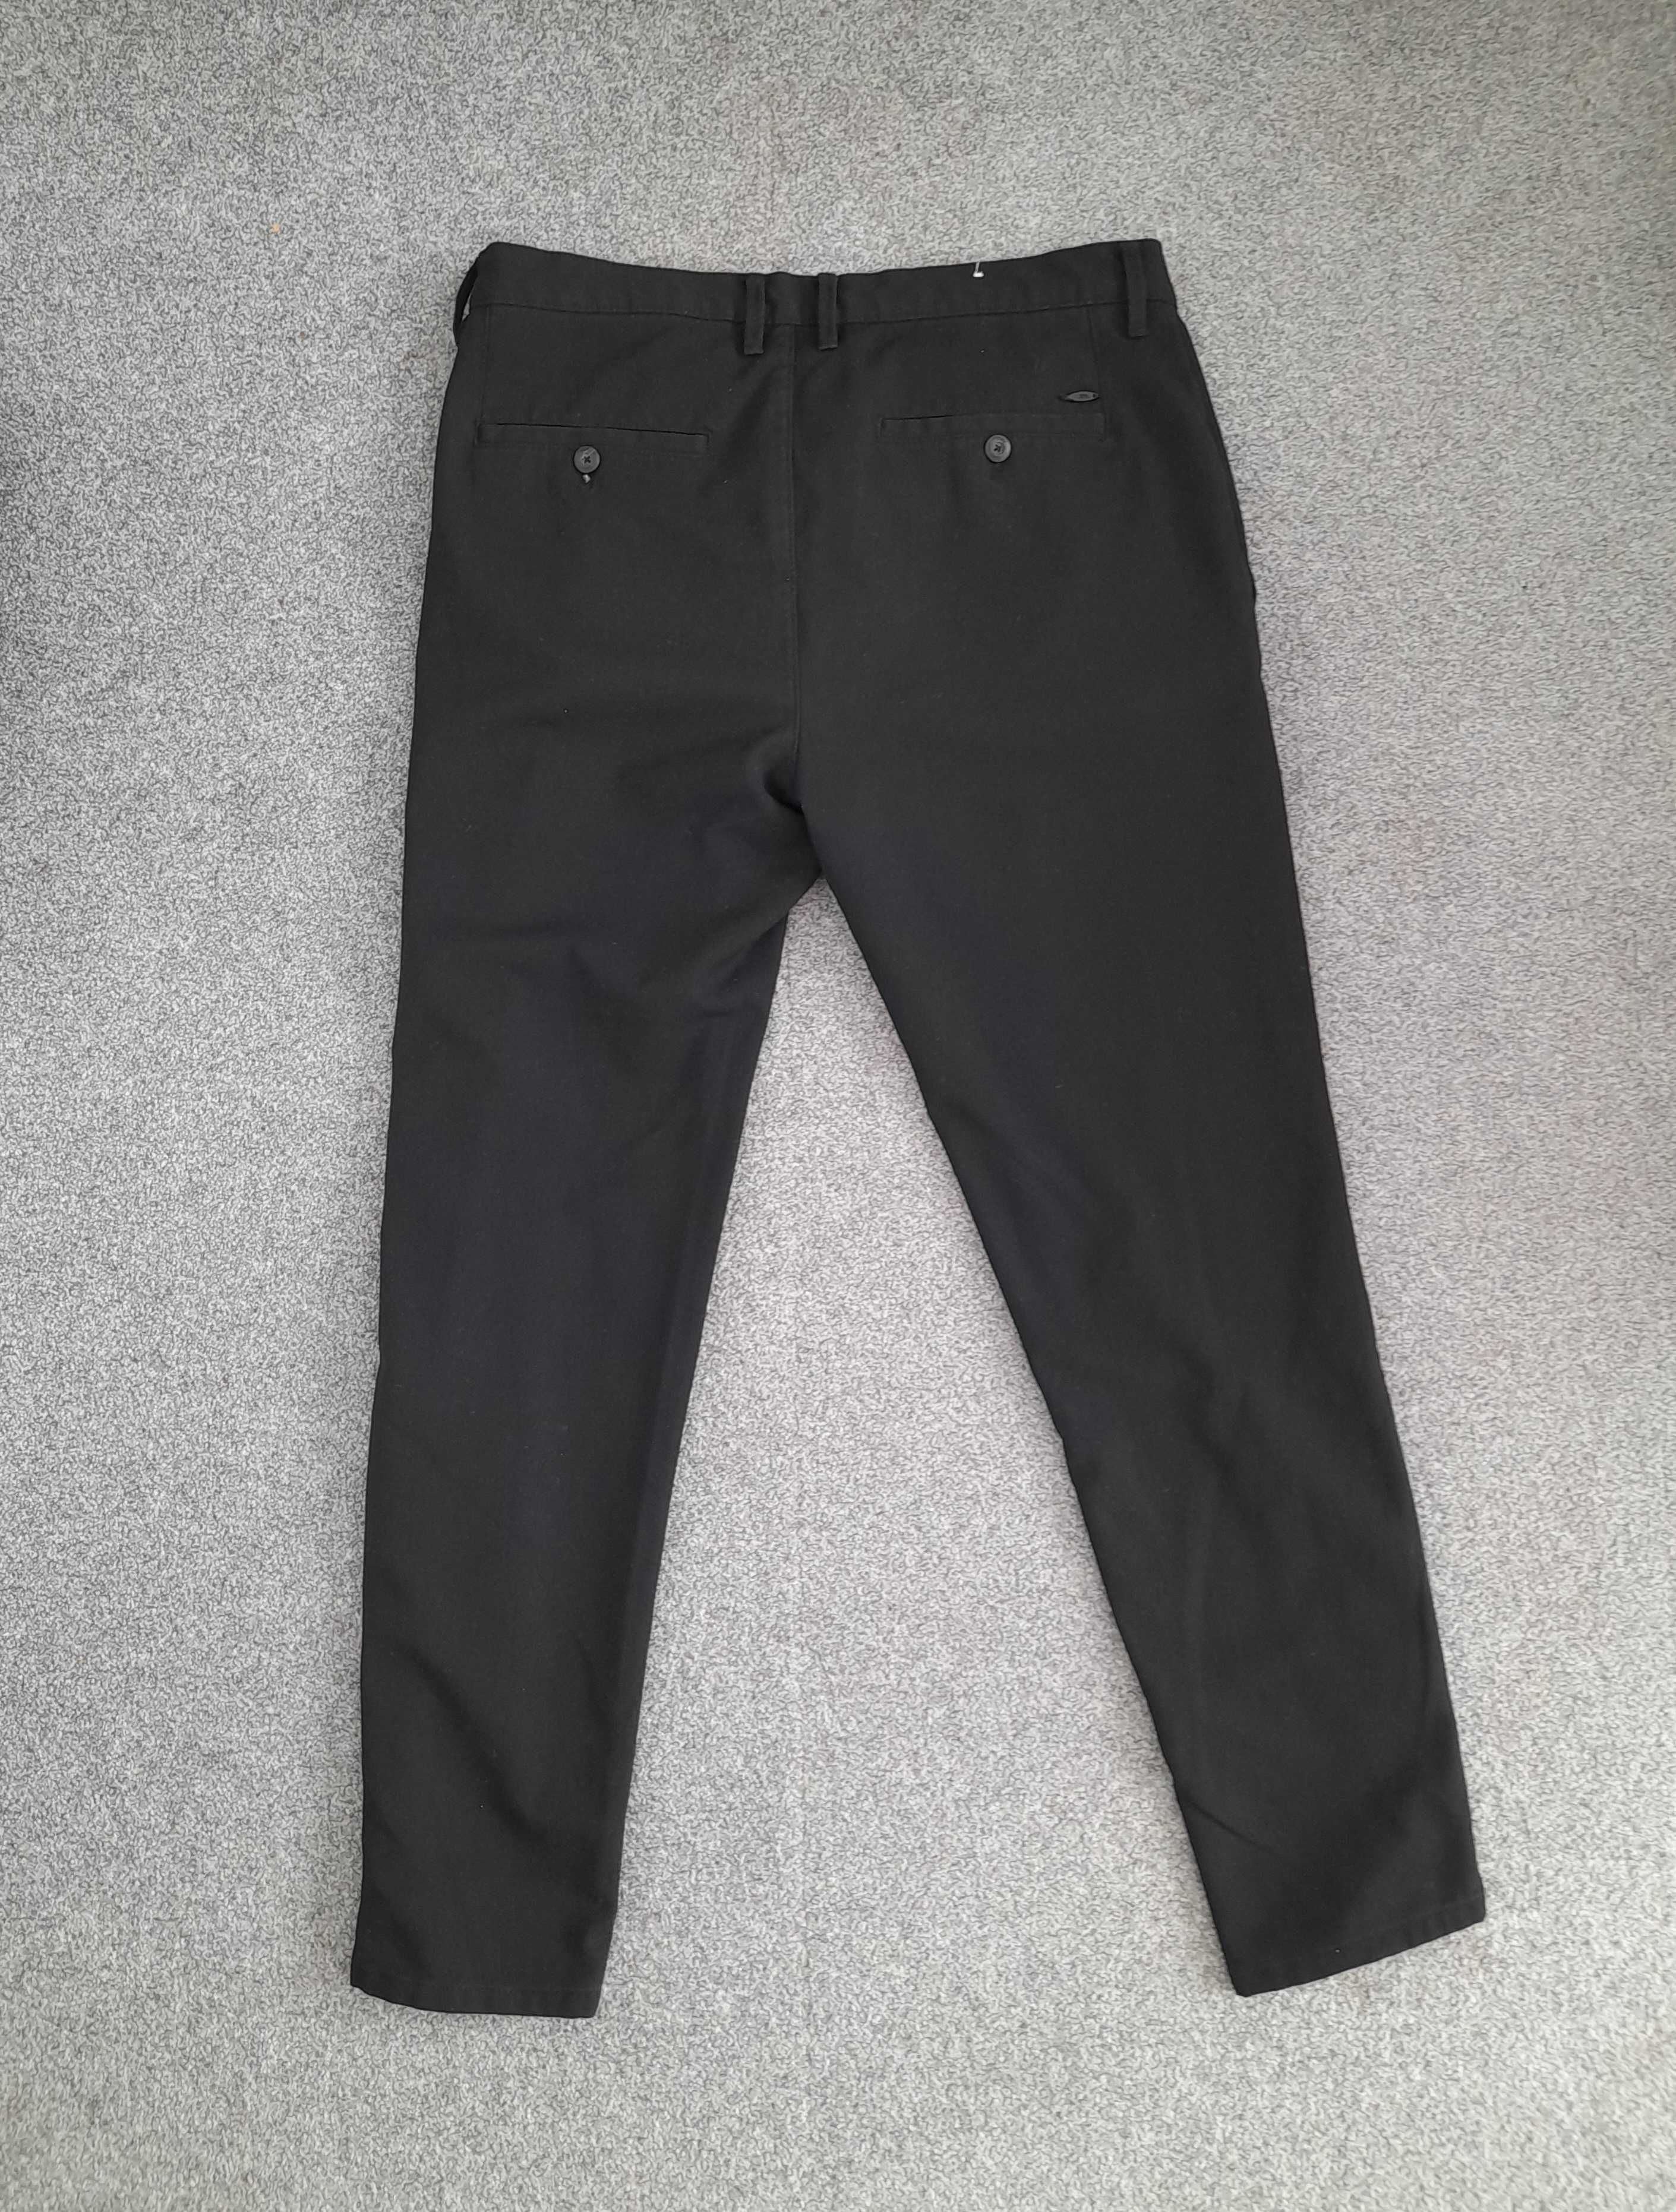 Spodnie ZARA MAN, rozmiar 42 (M/L), gratis ZARA Denim Jeans